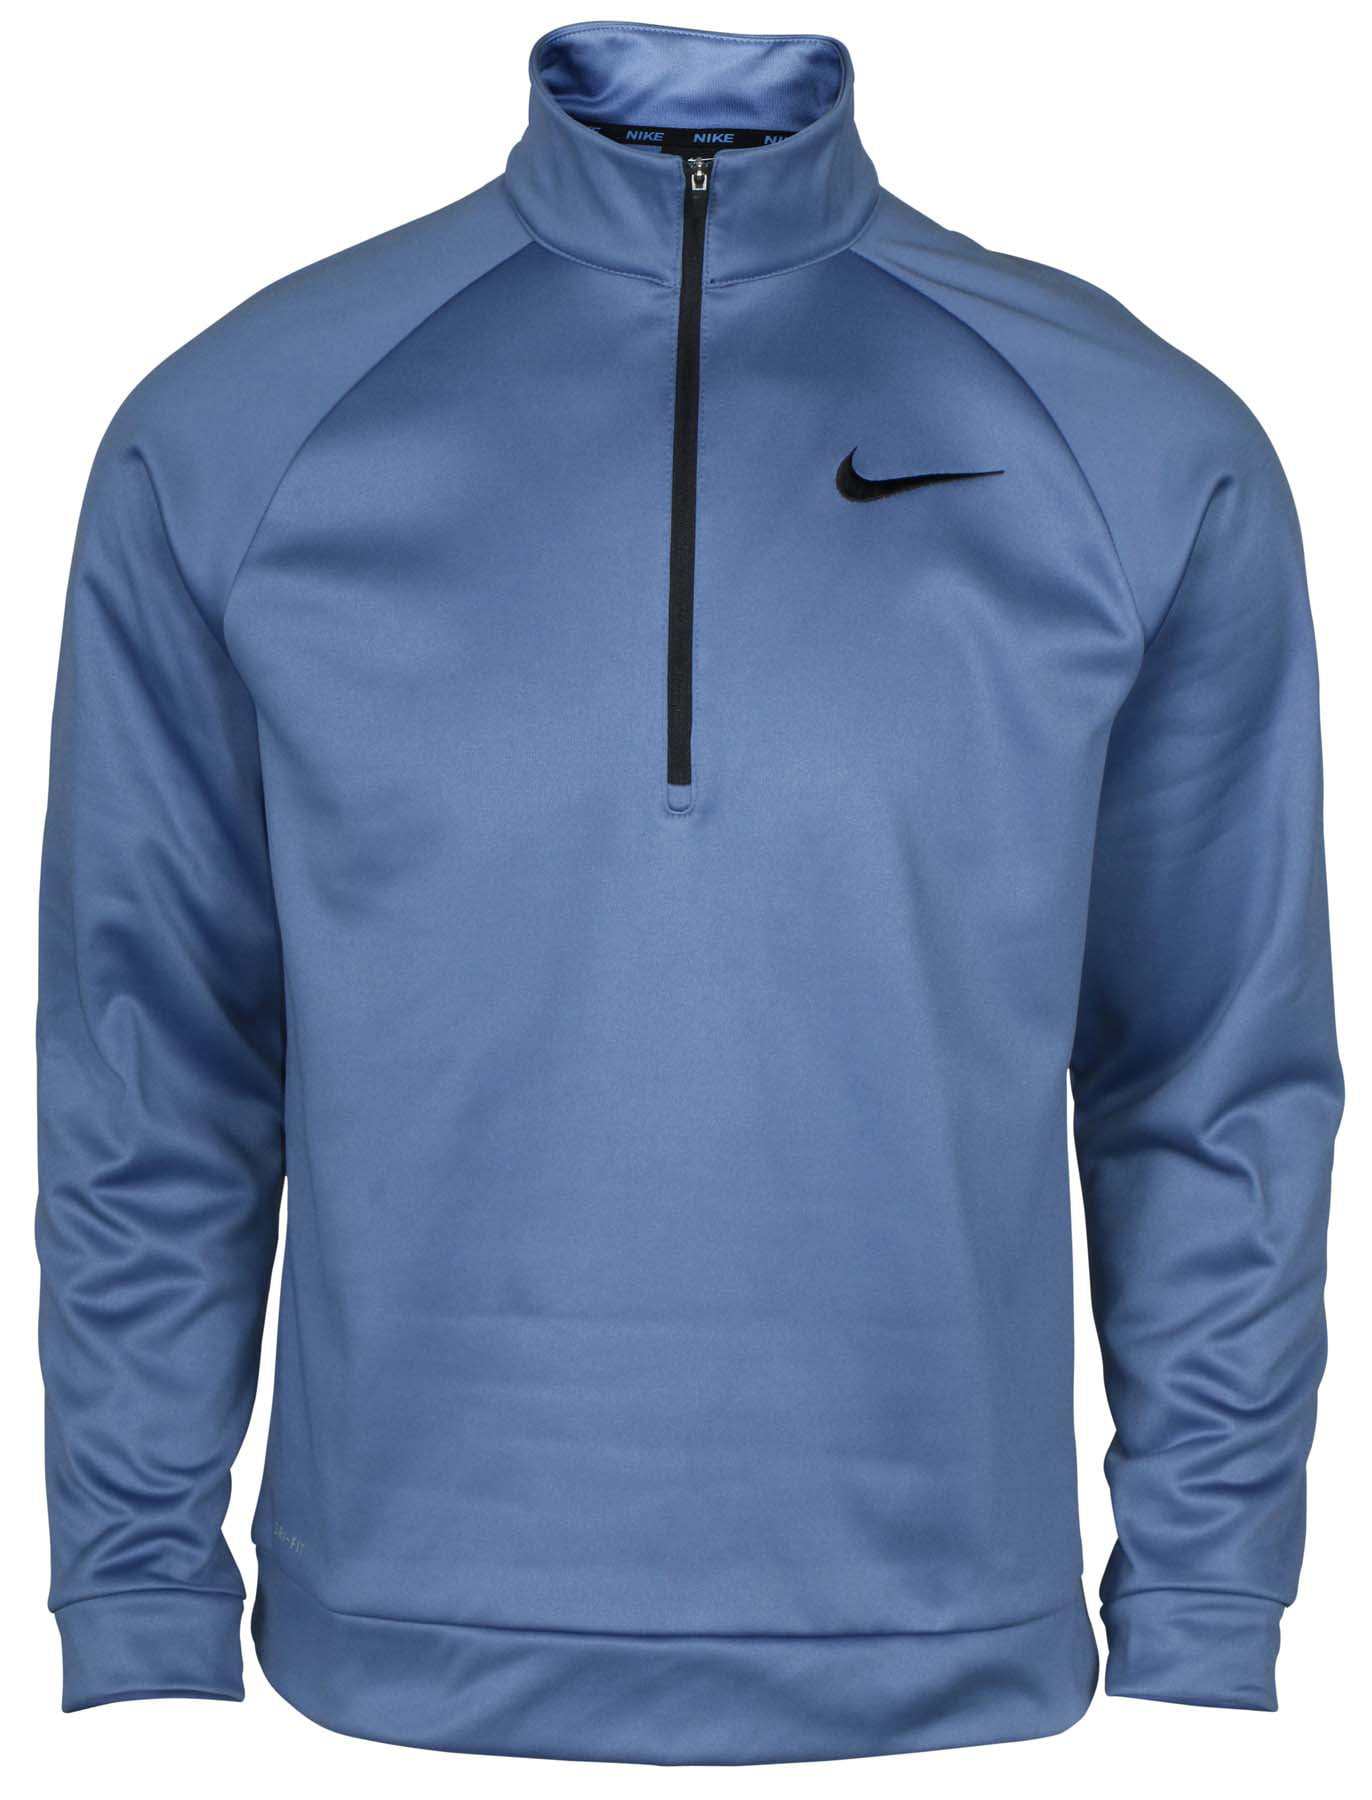 Nike - Nike Men's Dri-Fit Therma 1/4 Zip Long Sleeve Training Top